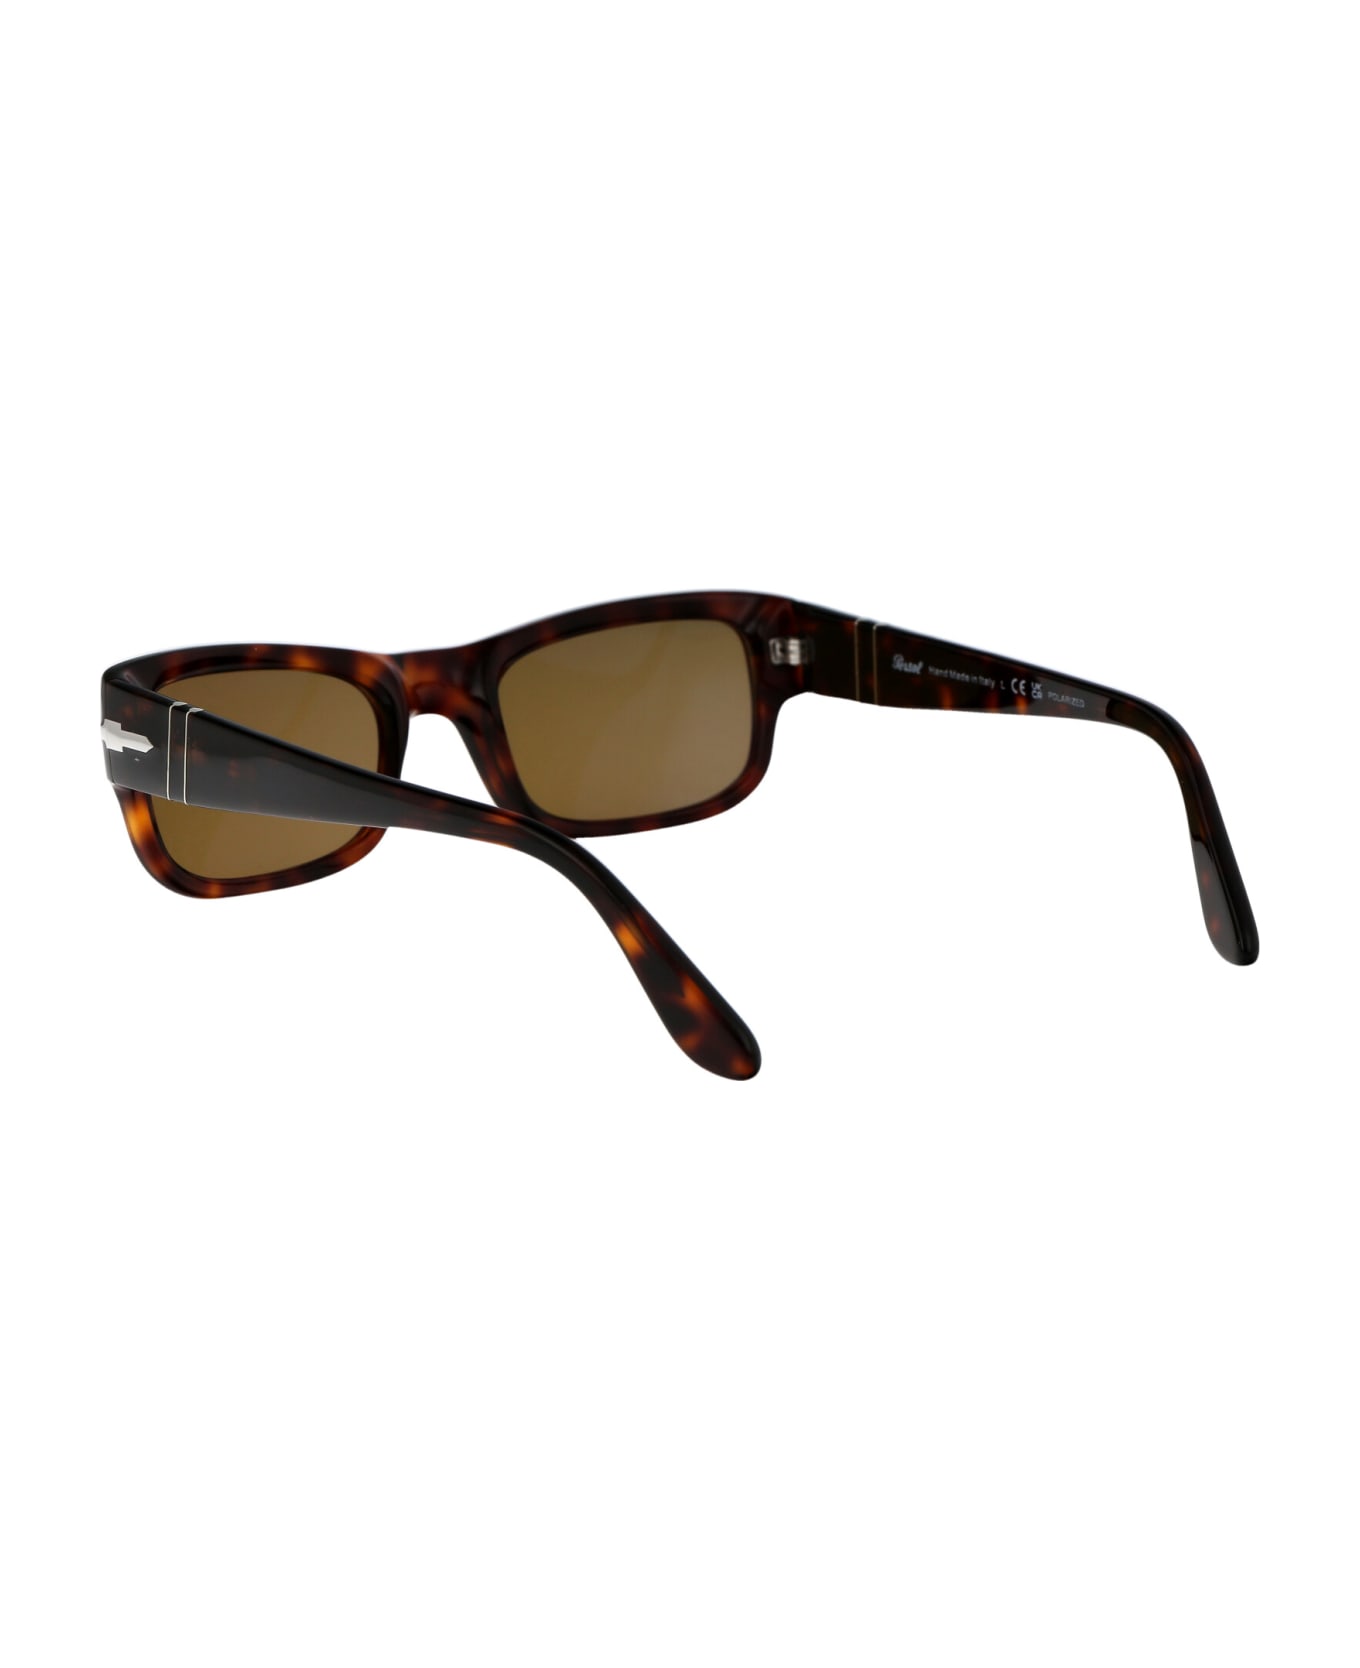 Persol 0po3326s Sunglasses - 24/57 HAVANA サングラス